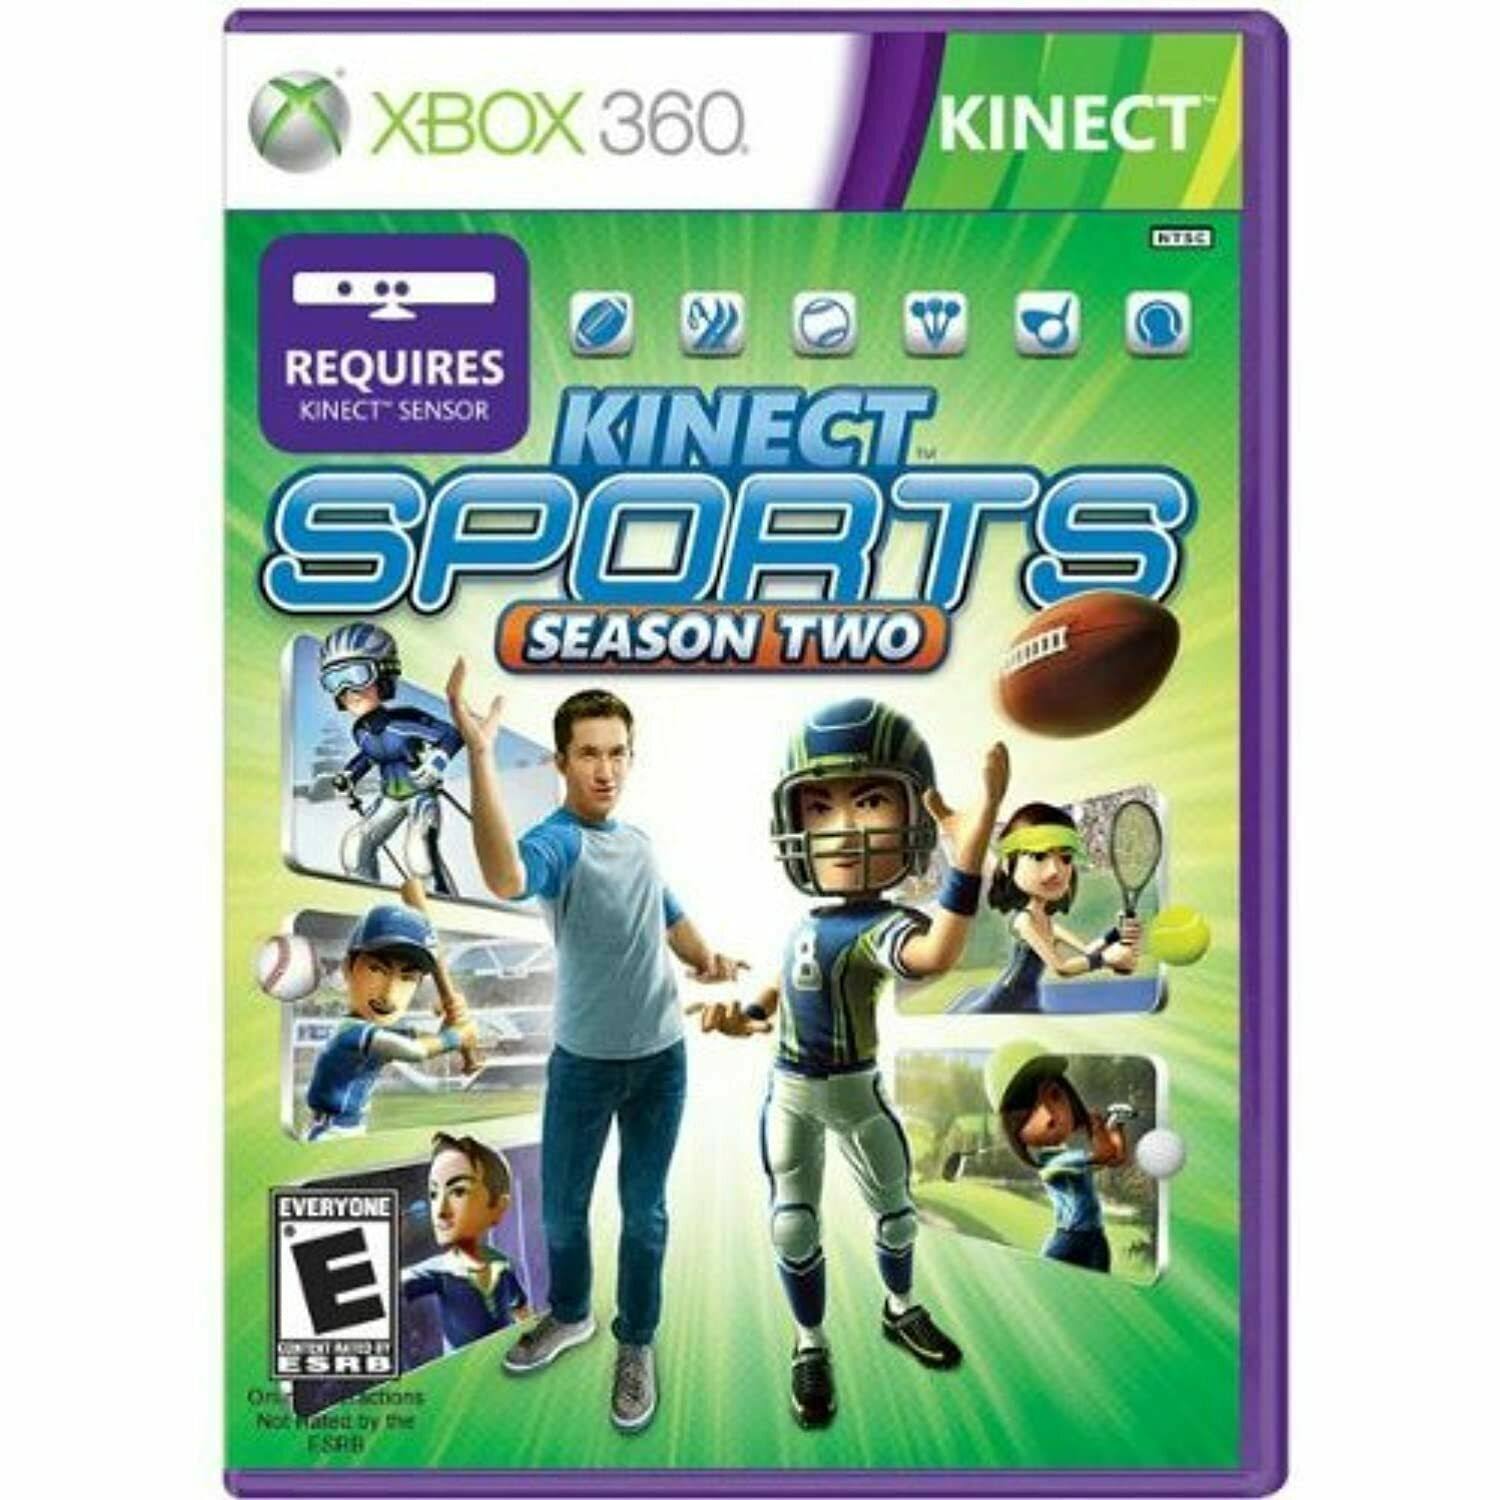 Kinect Sports: Season Two - Xbox 360